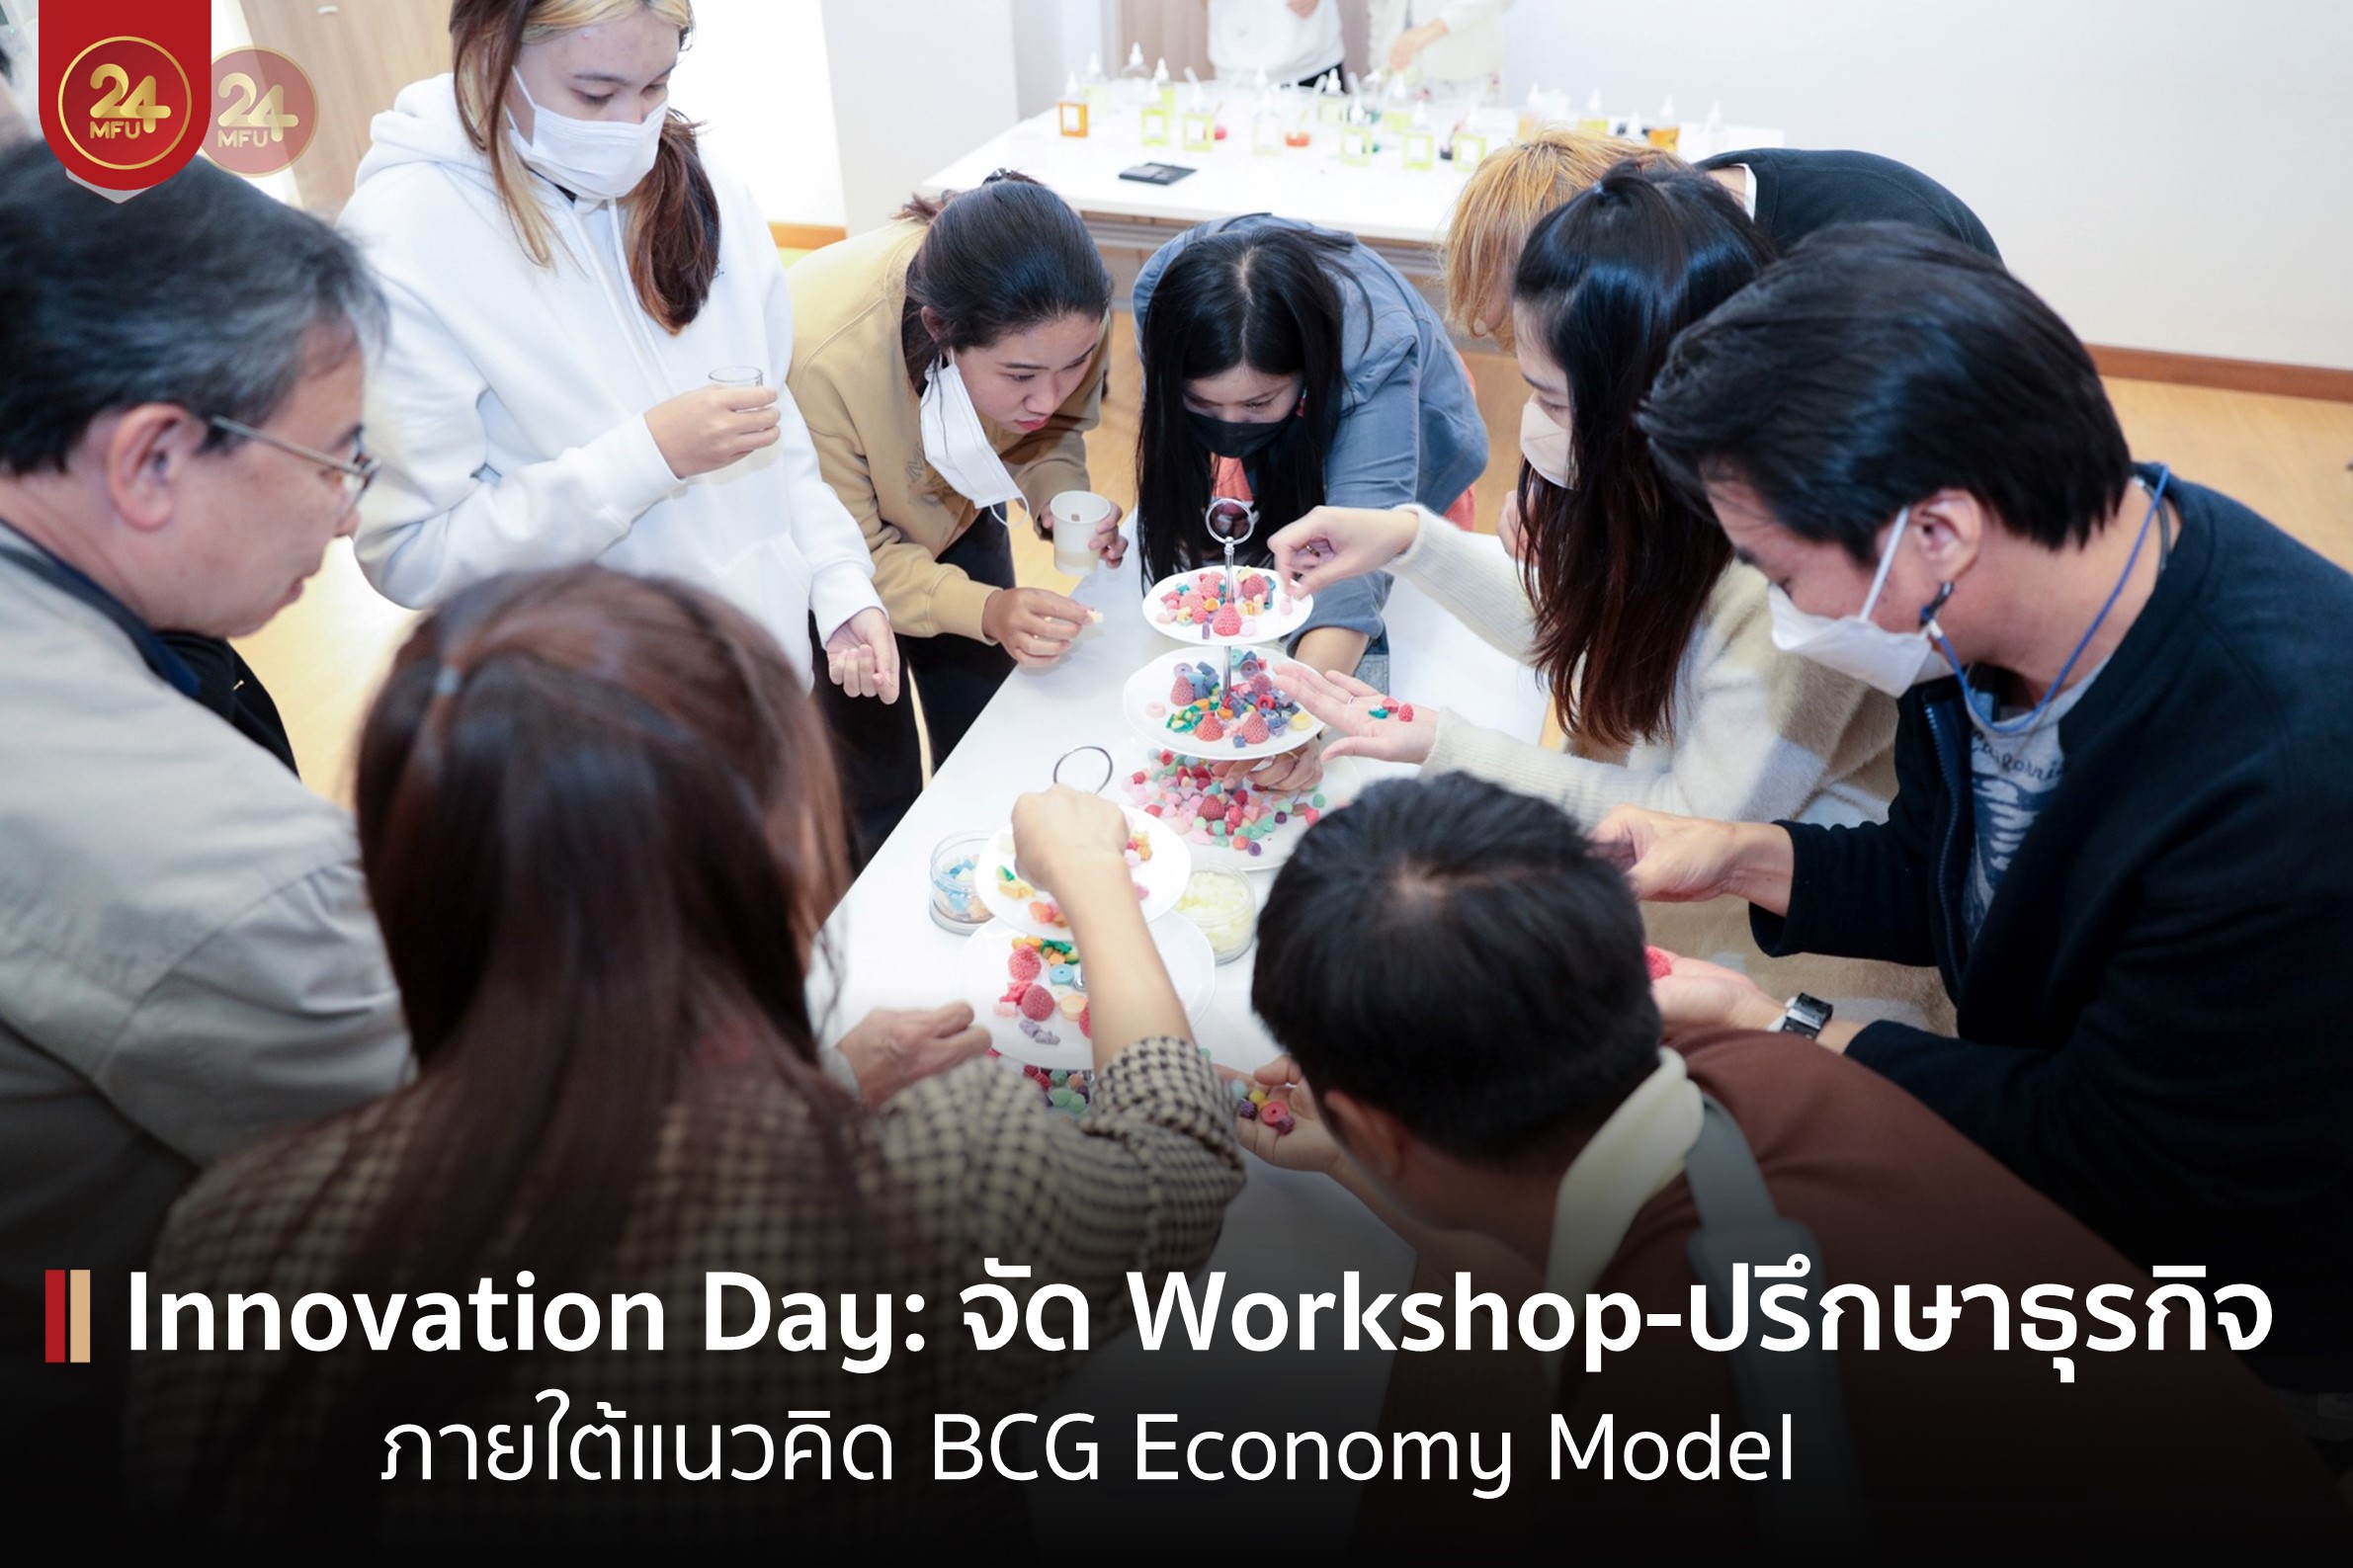 MFU Innovation Day 2022 จัด Workshop ปรุงน้ำหอม-เทียนหอม-ปรึกษาธุรกิจ SME มีผู้สนใจเข้าร่วมล้นหลาม